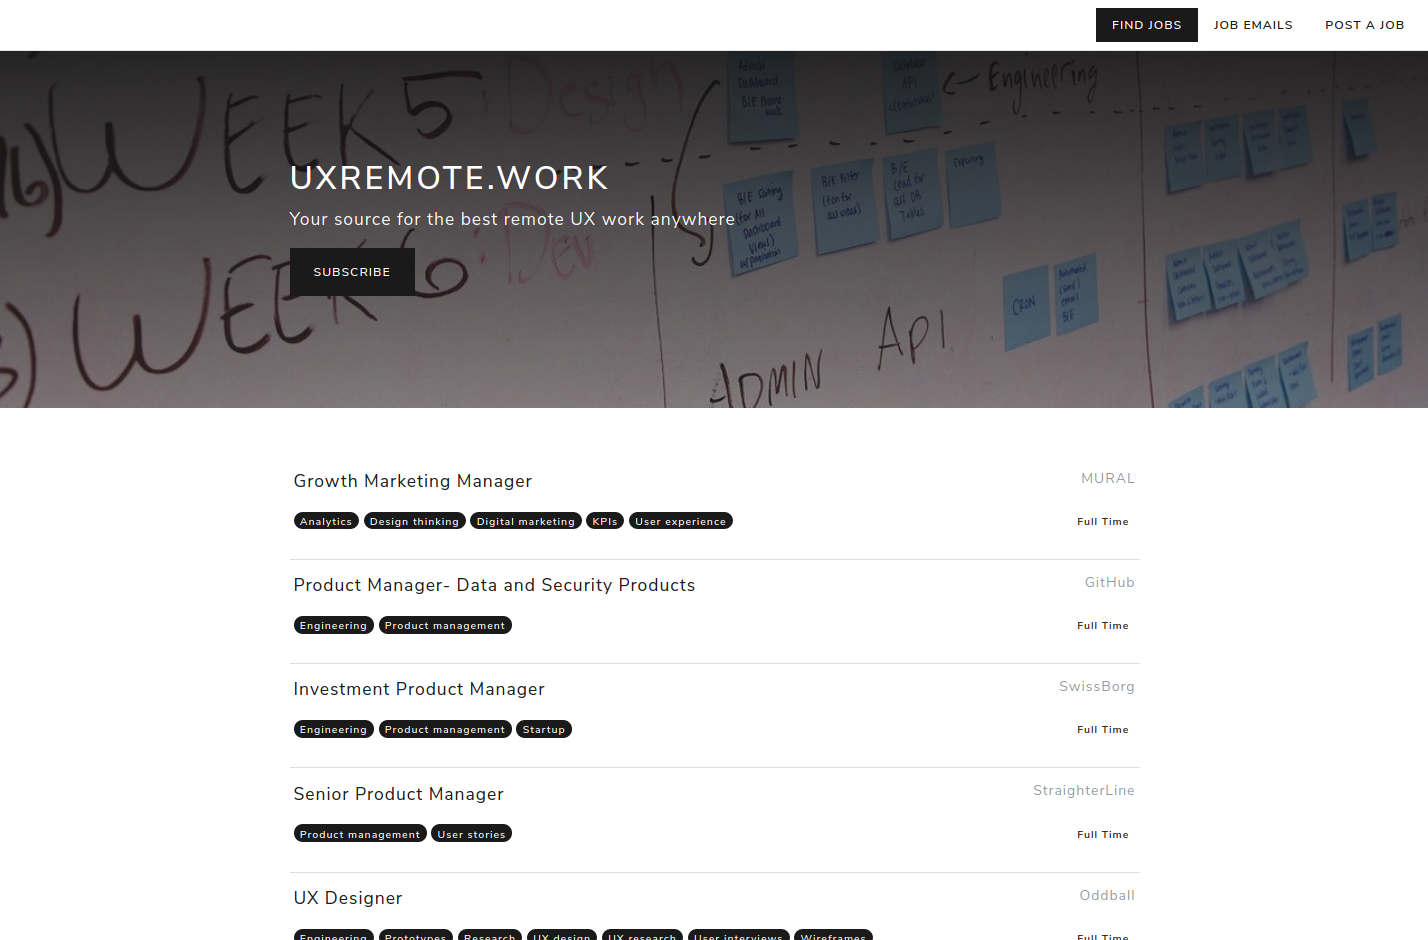 Find detailed information about UXREMOTE.WORK